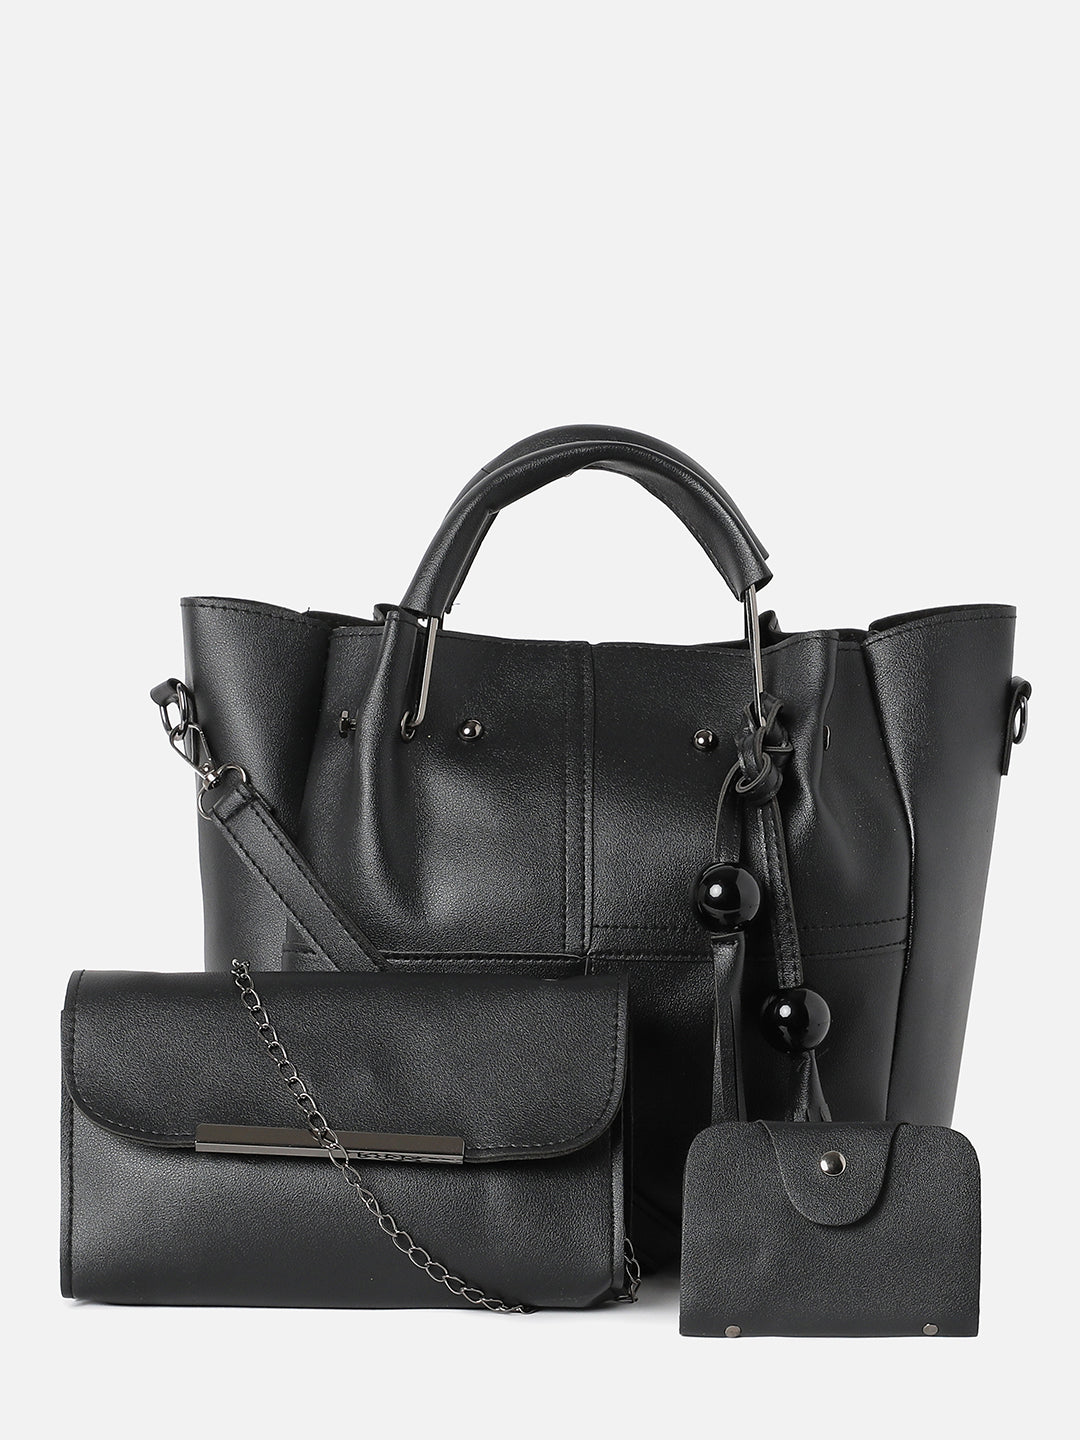 Textured Black Bags Combo Set